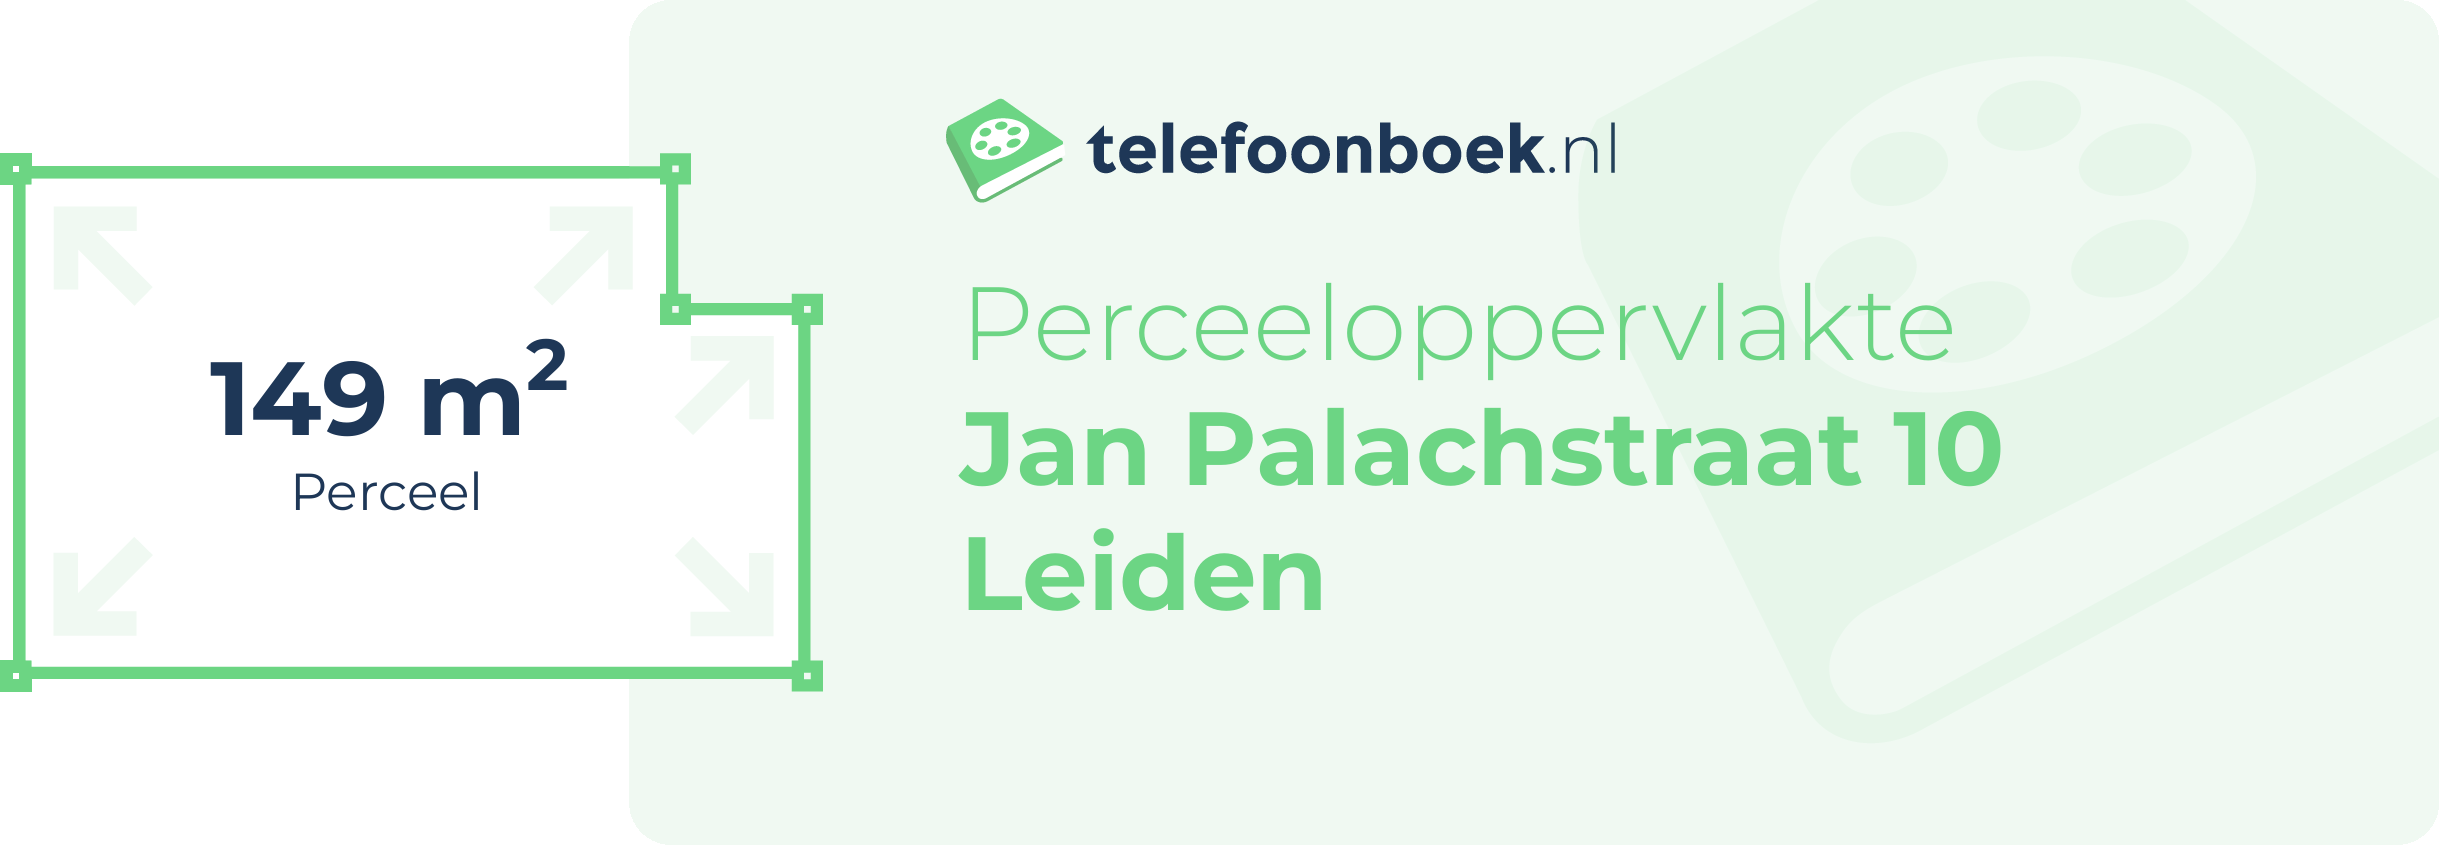 Perceeloppervlakte Jan Palachstraat 10 Leiden